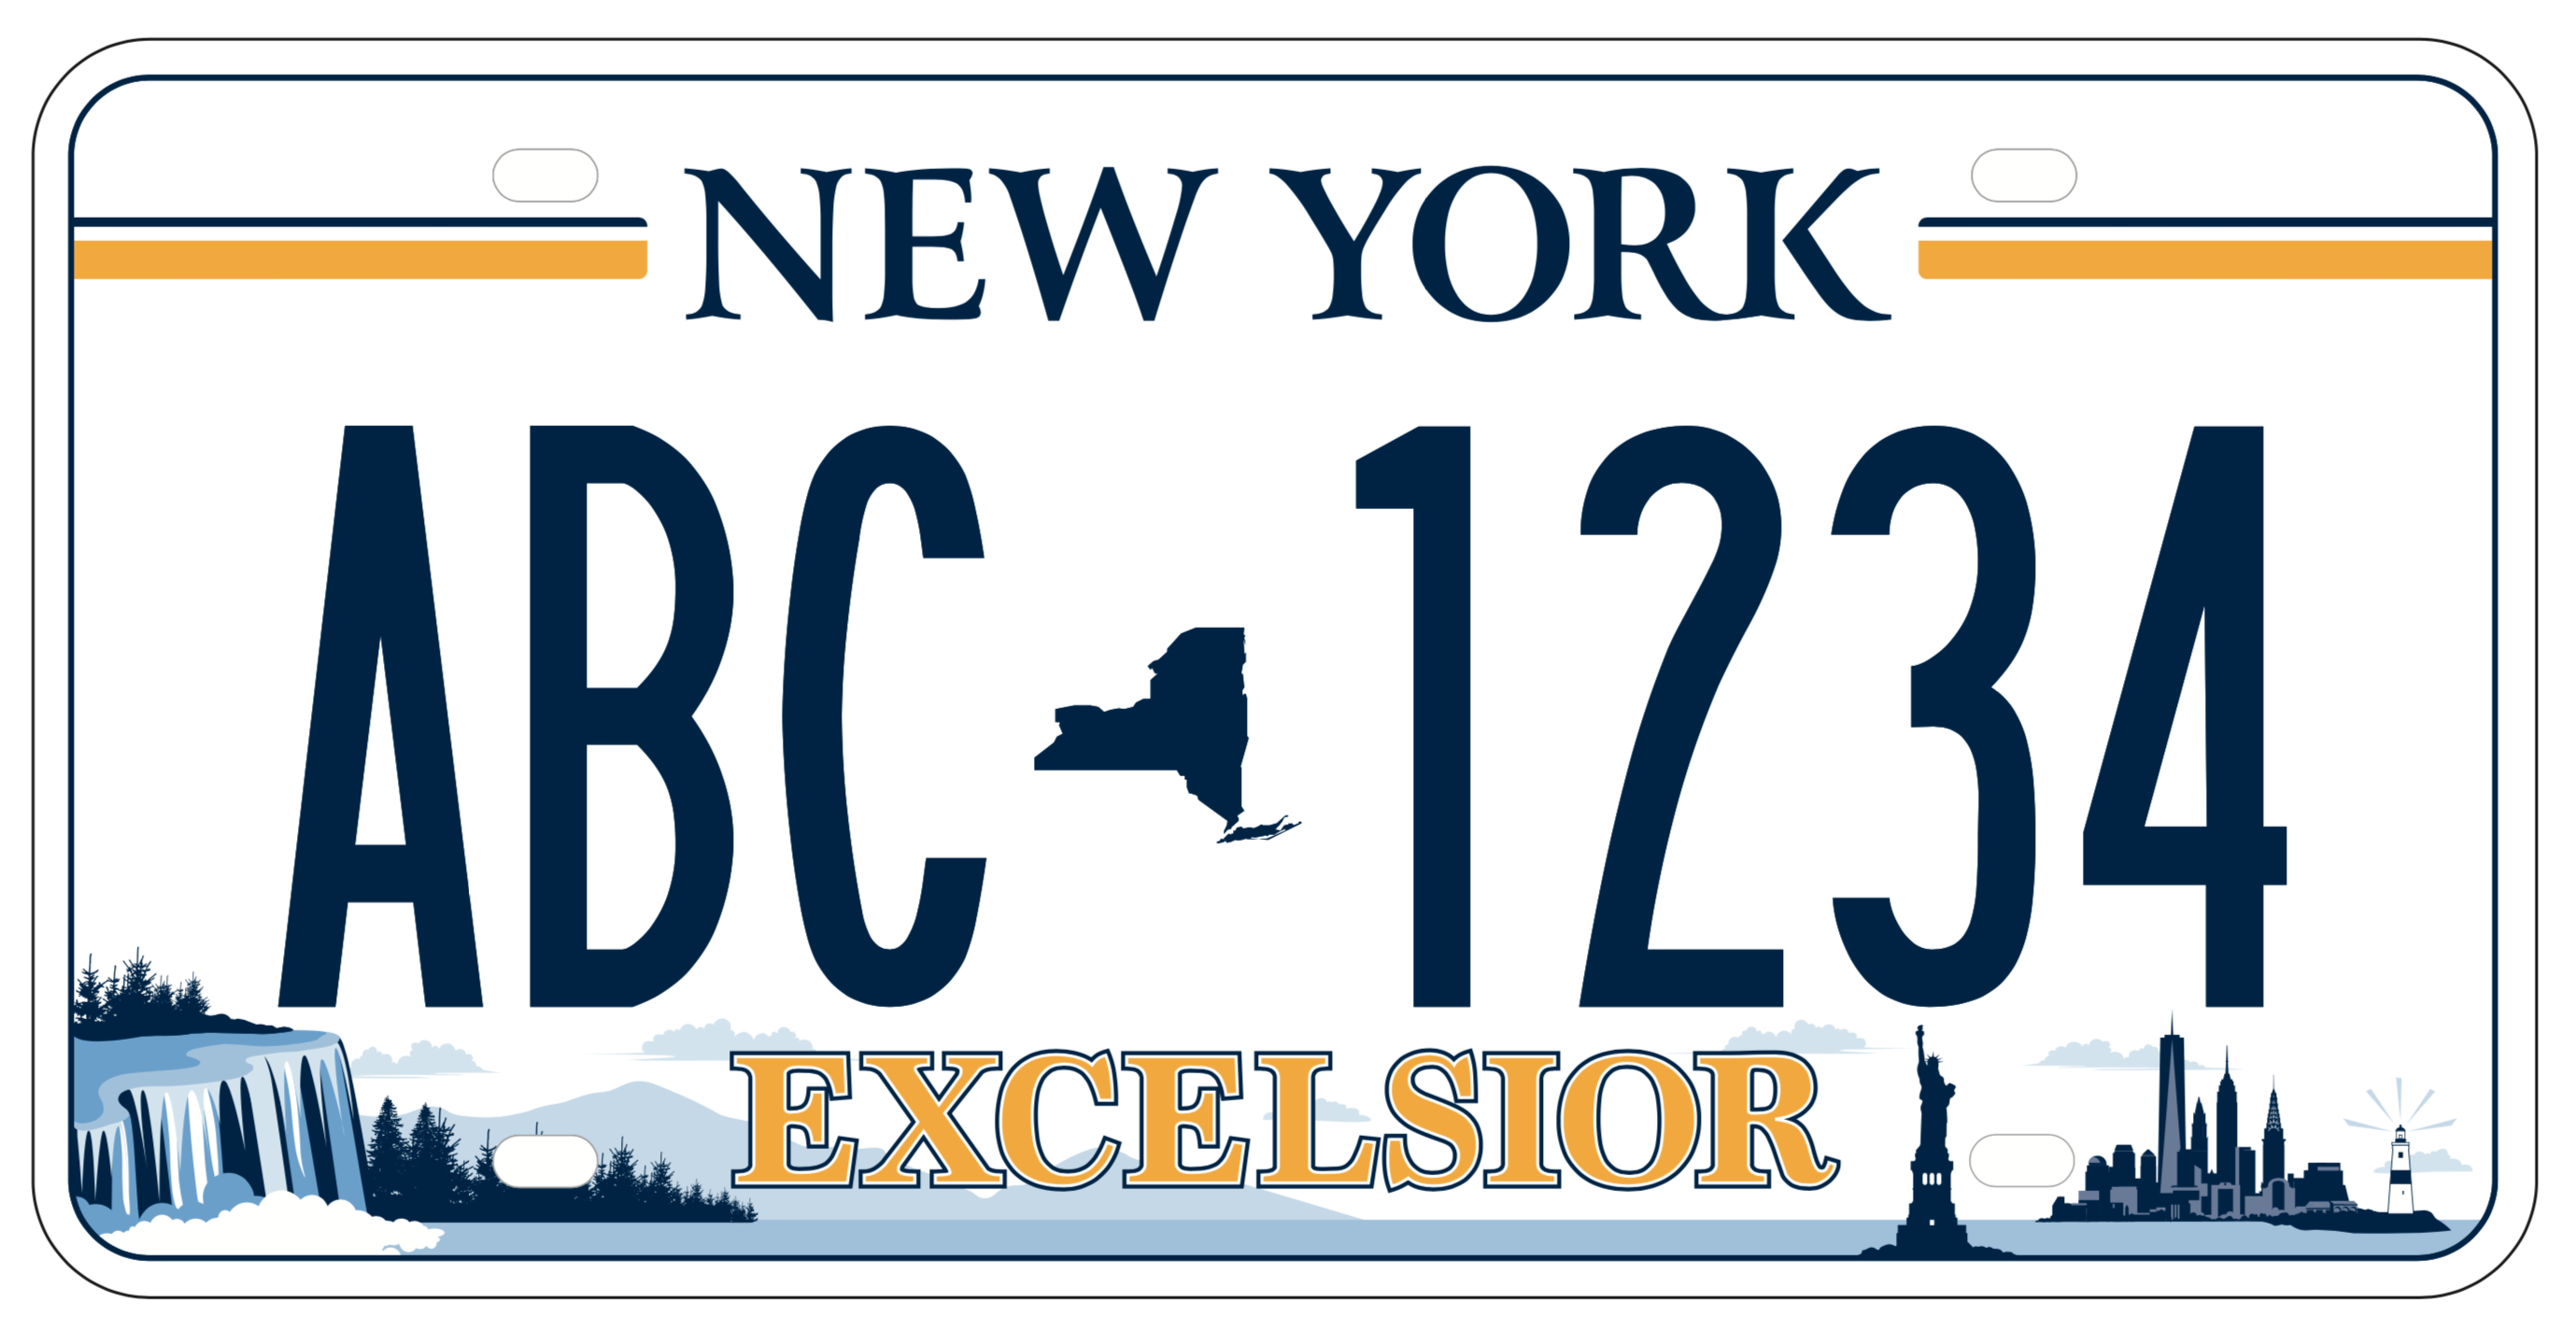 New York's new license plates finally 